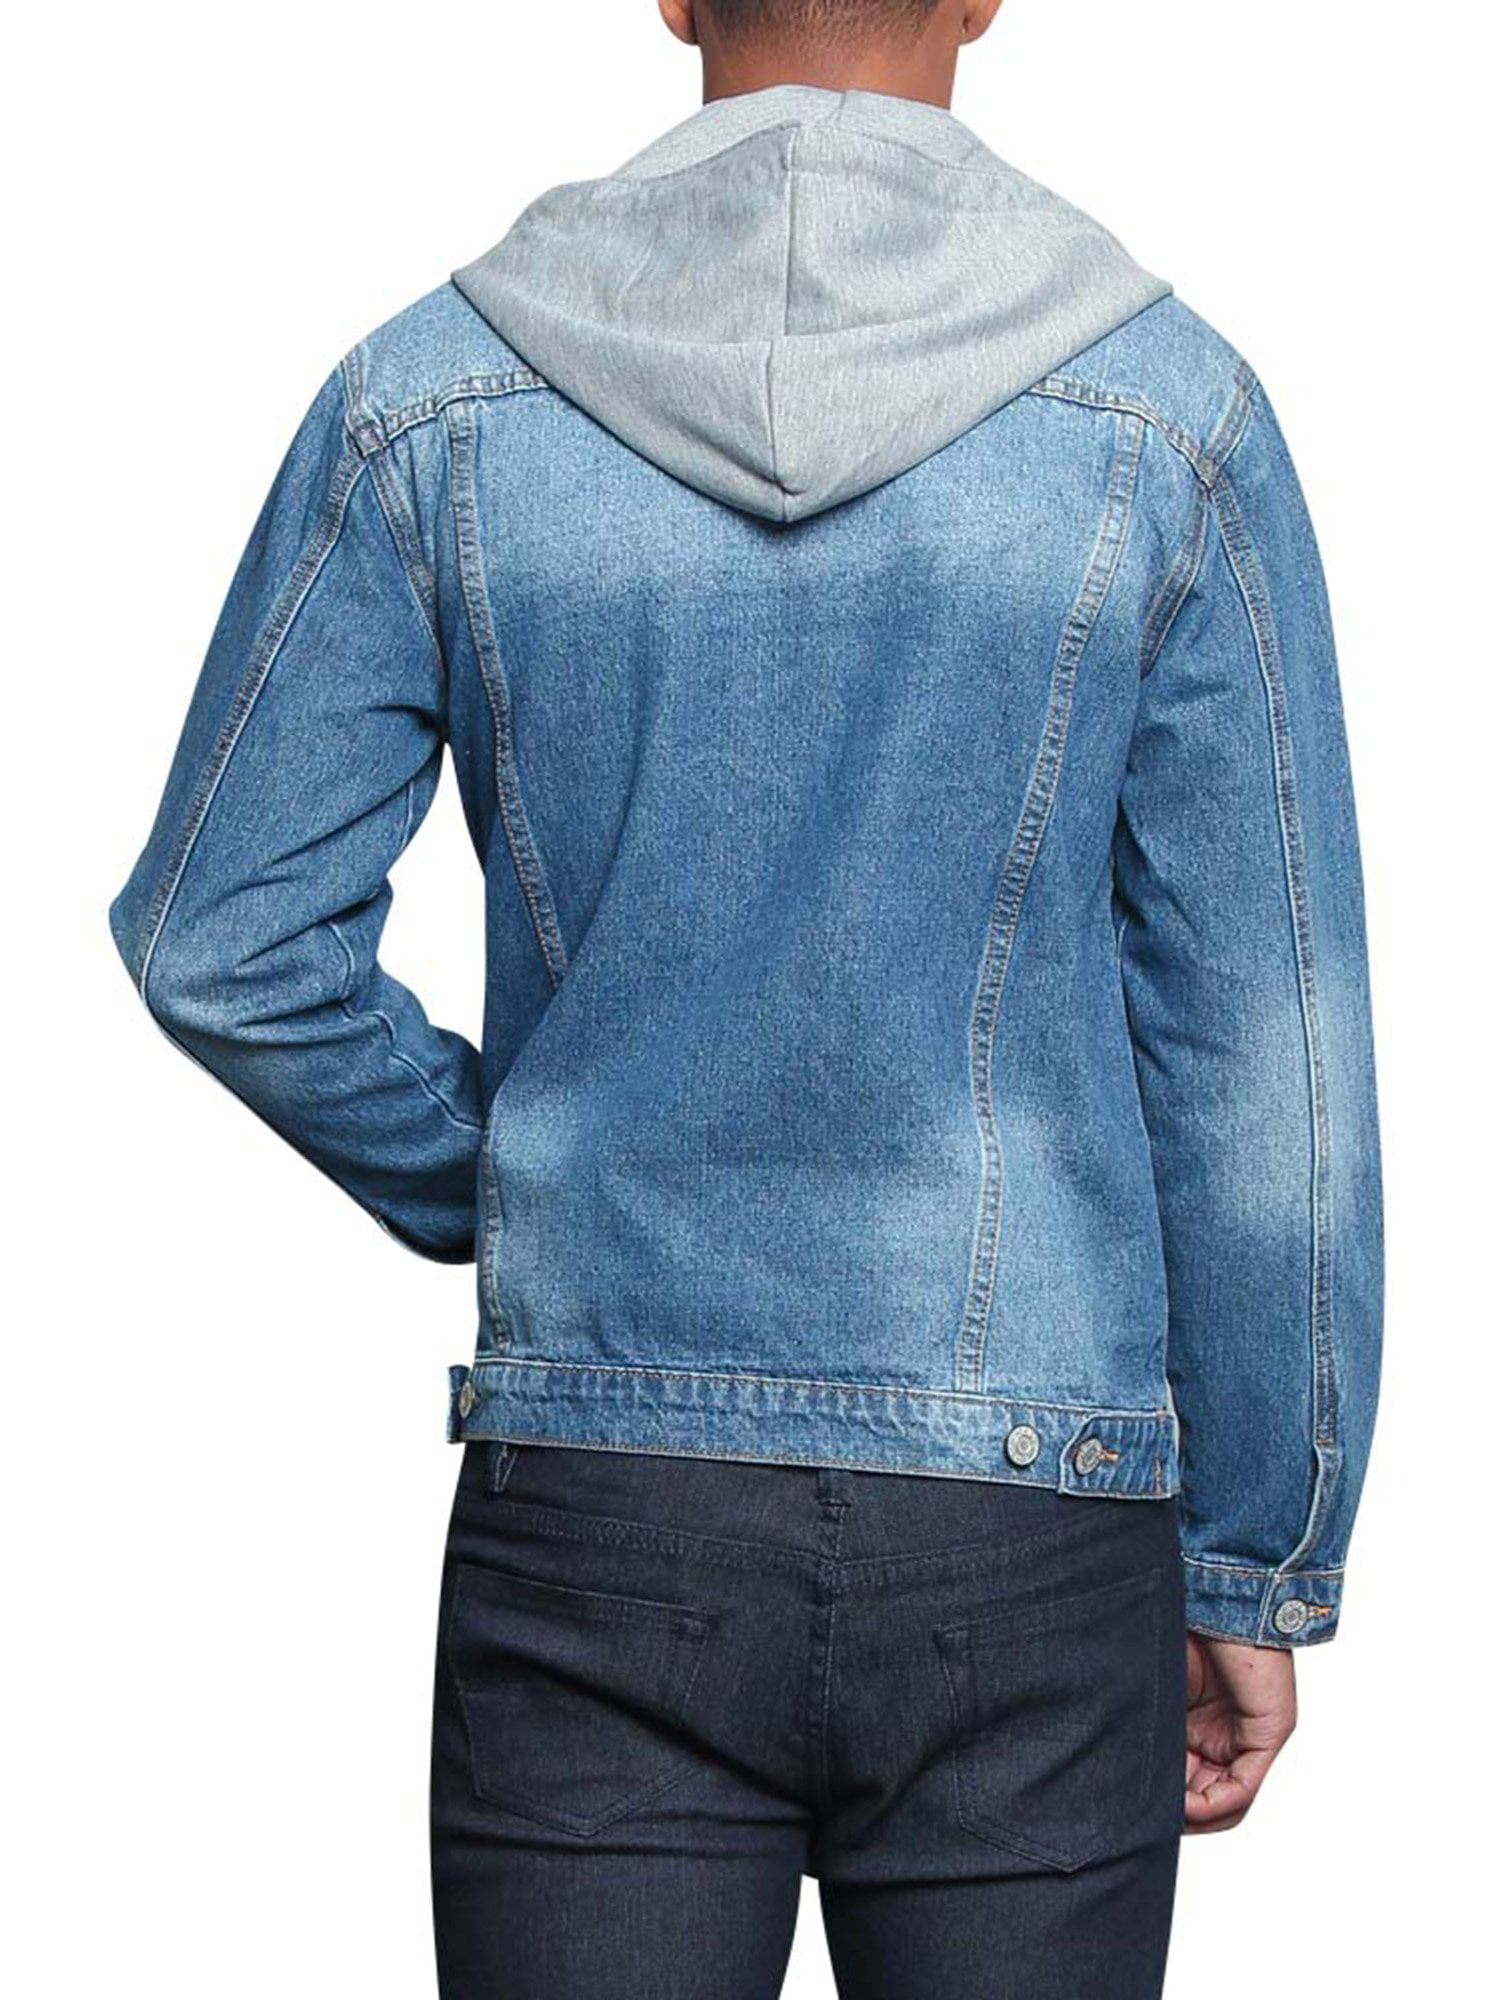 Victorious Men's Detachable Hood Layered Look Distressed Denim Jacket DK135  - Indigo - 3X-Large